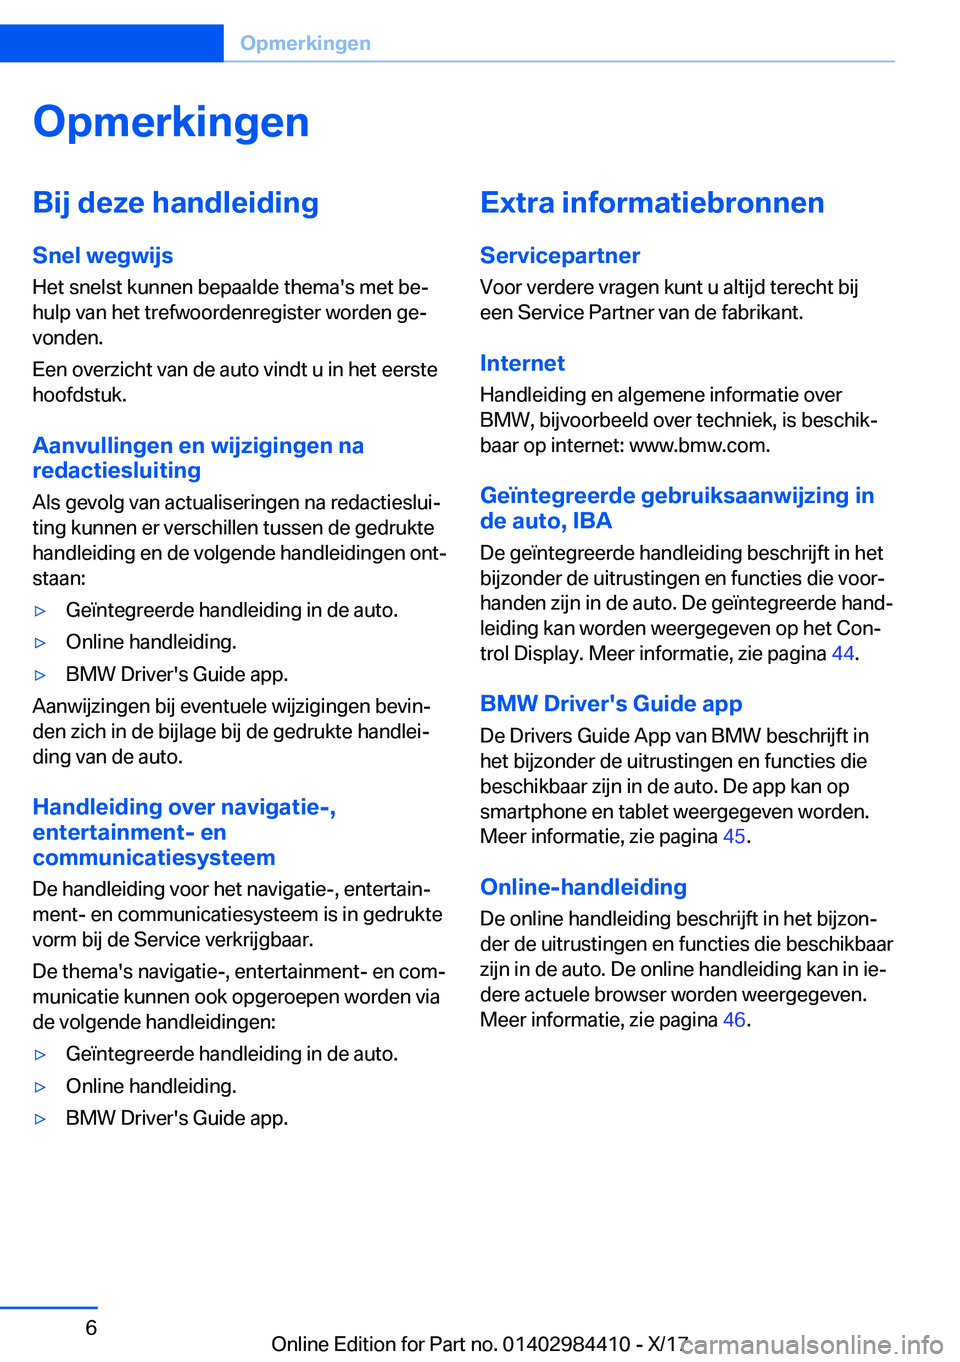 BMW 4 SERIES COUPE 2018  Instructieboekjes (in Dutch) �O�p�m�e�r�k�i�n�g�e�n�B�i�j��d�e�z�e��h�a�n�d�l�e�i�d�i�n�g�S�n�e�l��w�e�g�w�i�j�s
�H�e�t� �s�n�e�l�s�t� �k�u�n�n�e�n� �b�e�p�a�a�l�d�e� �t�h�e�m�a�'�s� �m�e�t� �b�ej
�h�u�l�p� �v�a�n� �h�e�t